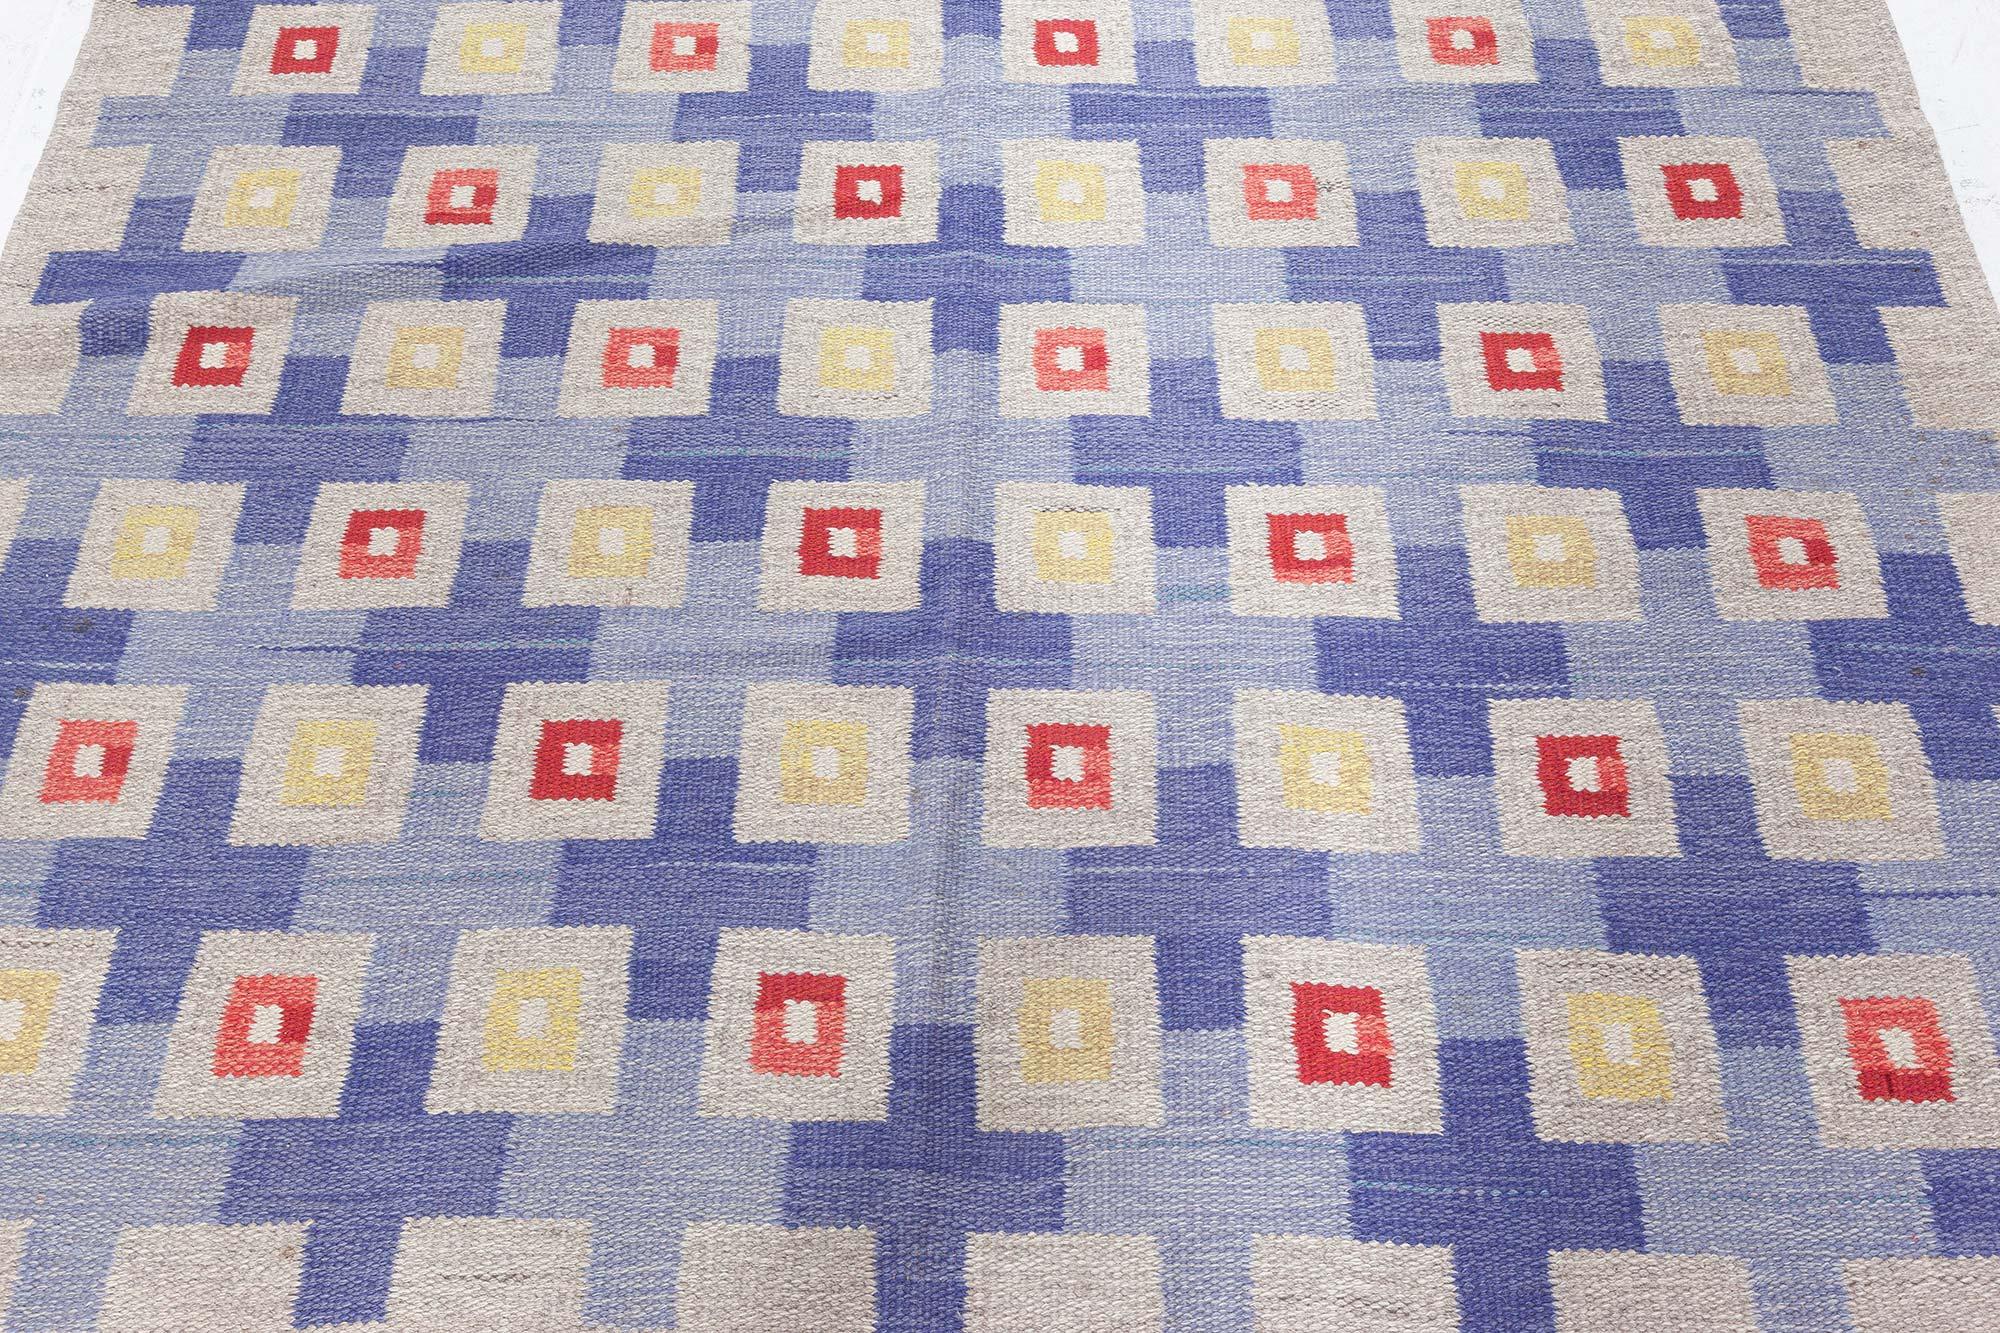 Mid-20th Century Swedish geometric Flat weave wool rug
Size: 5'5